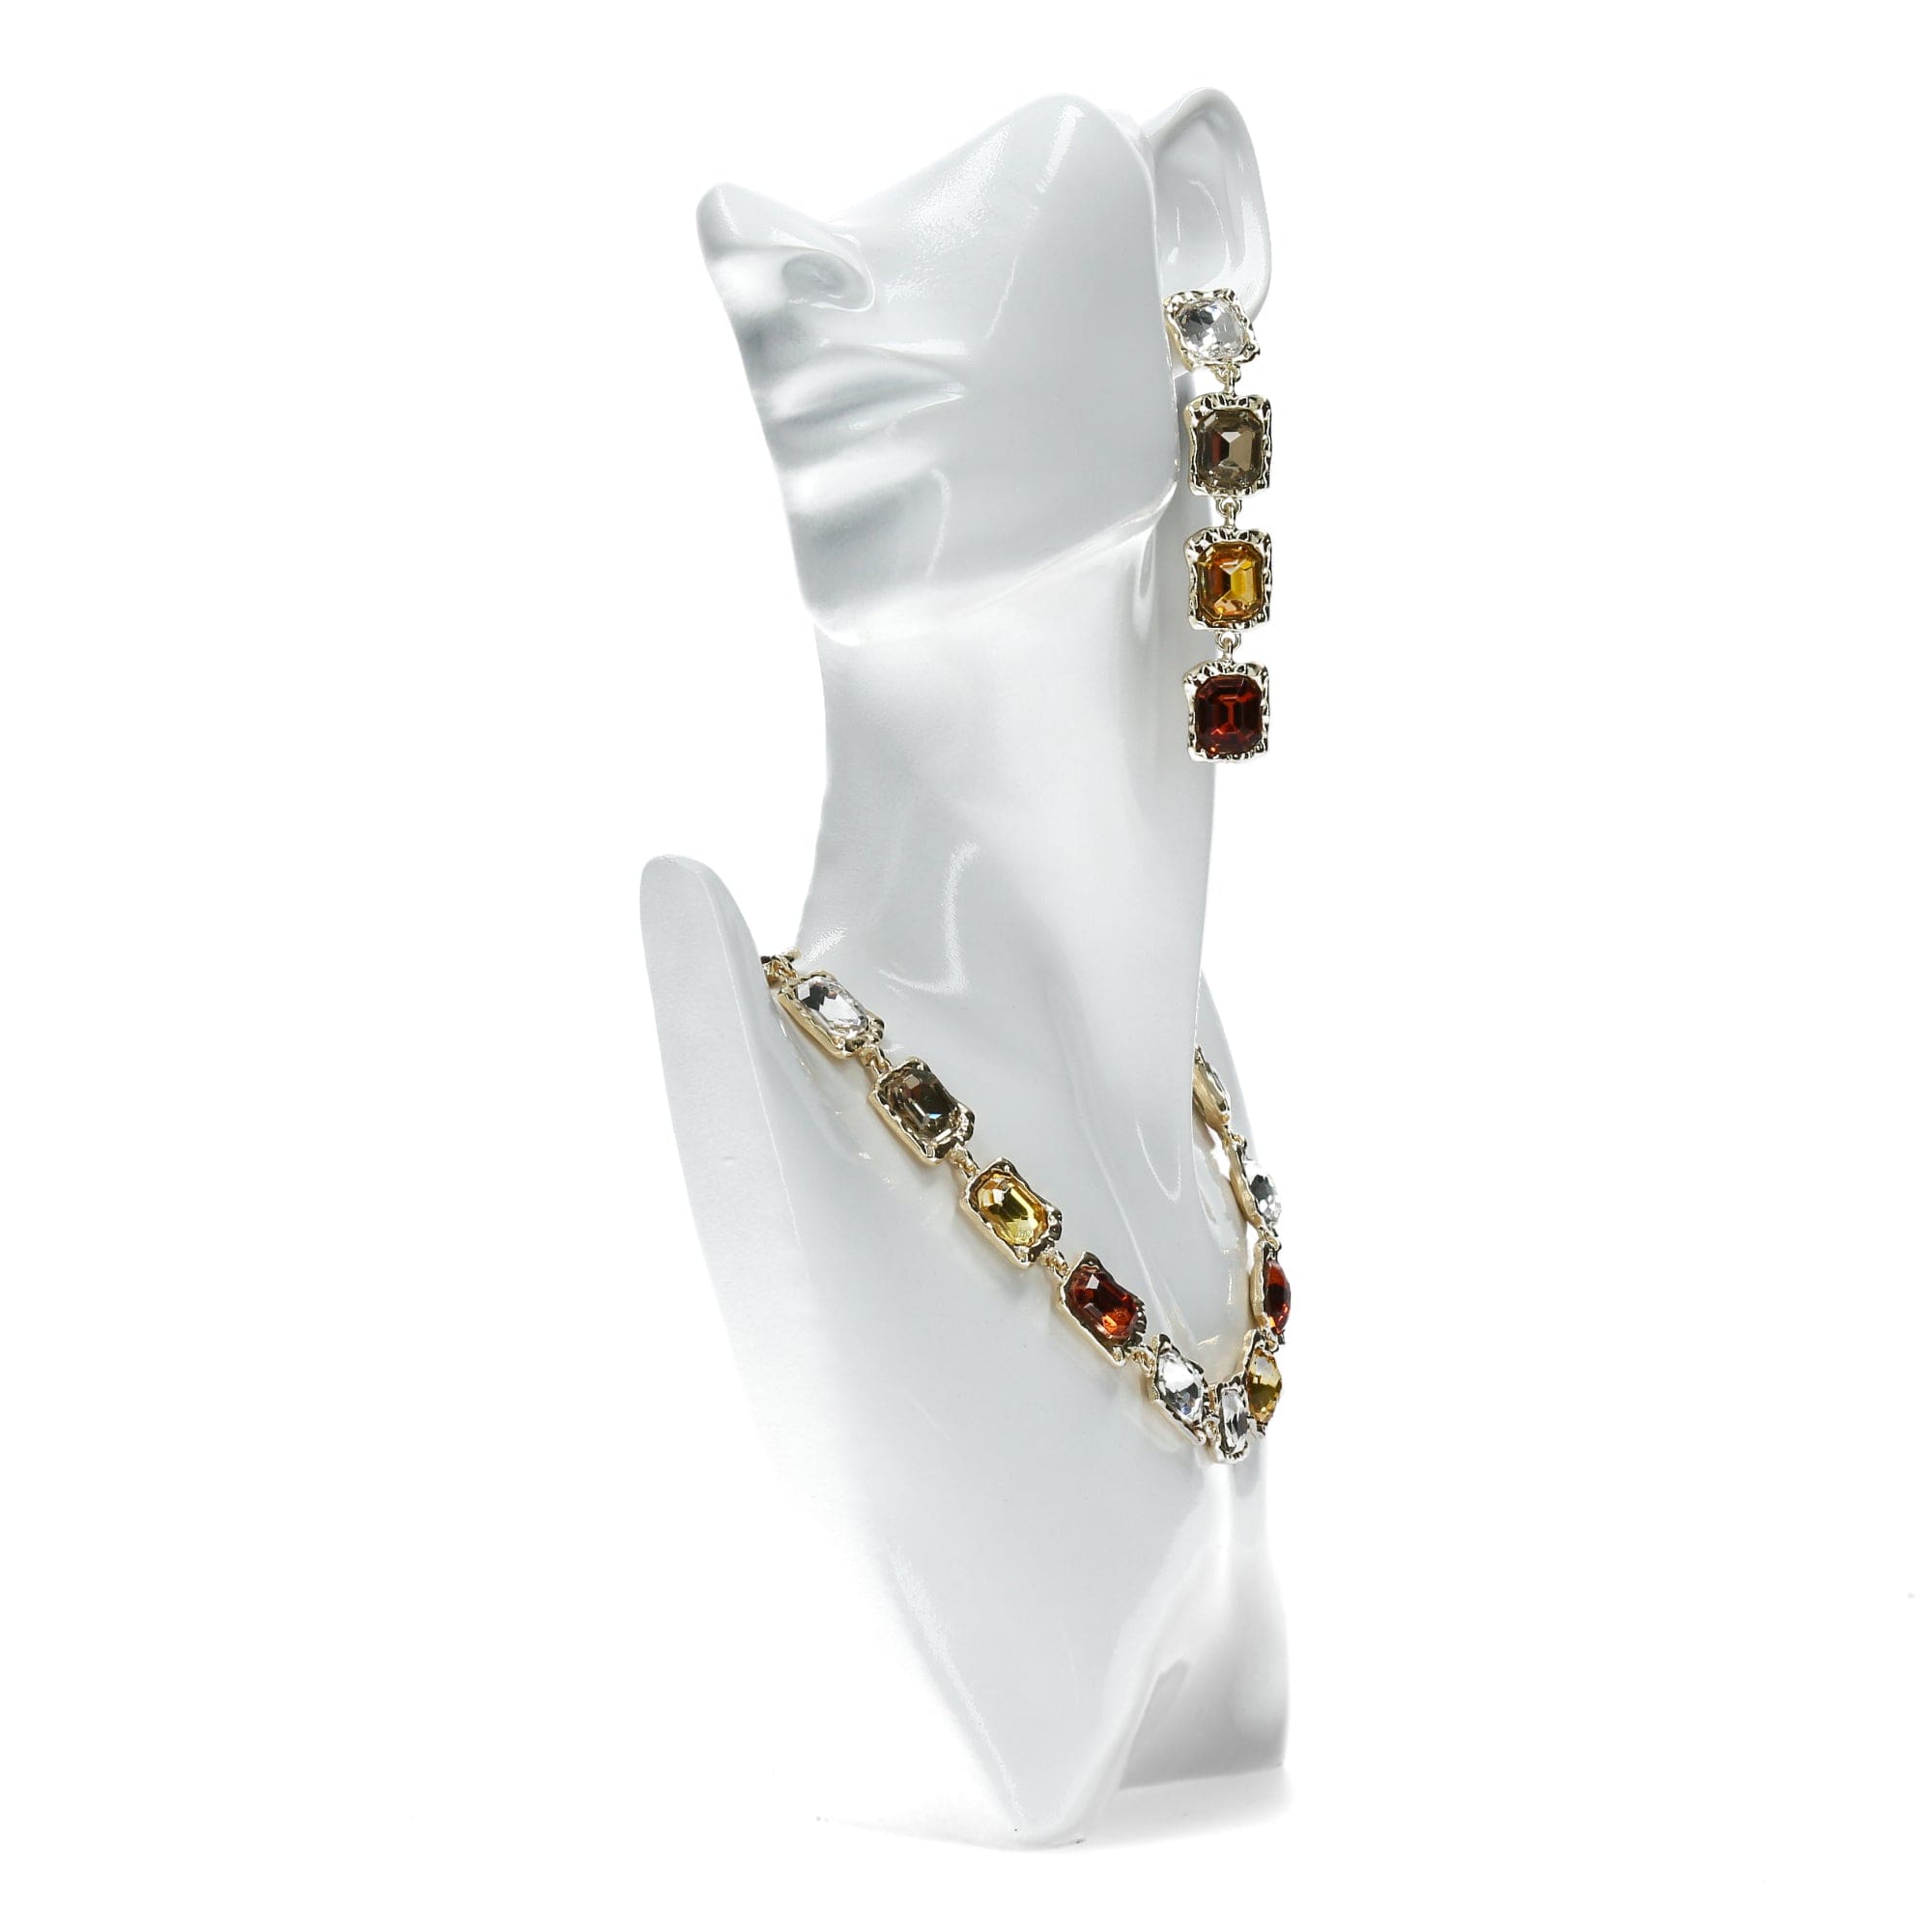 Stefany jewelry set - Necklace